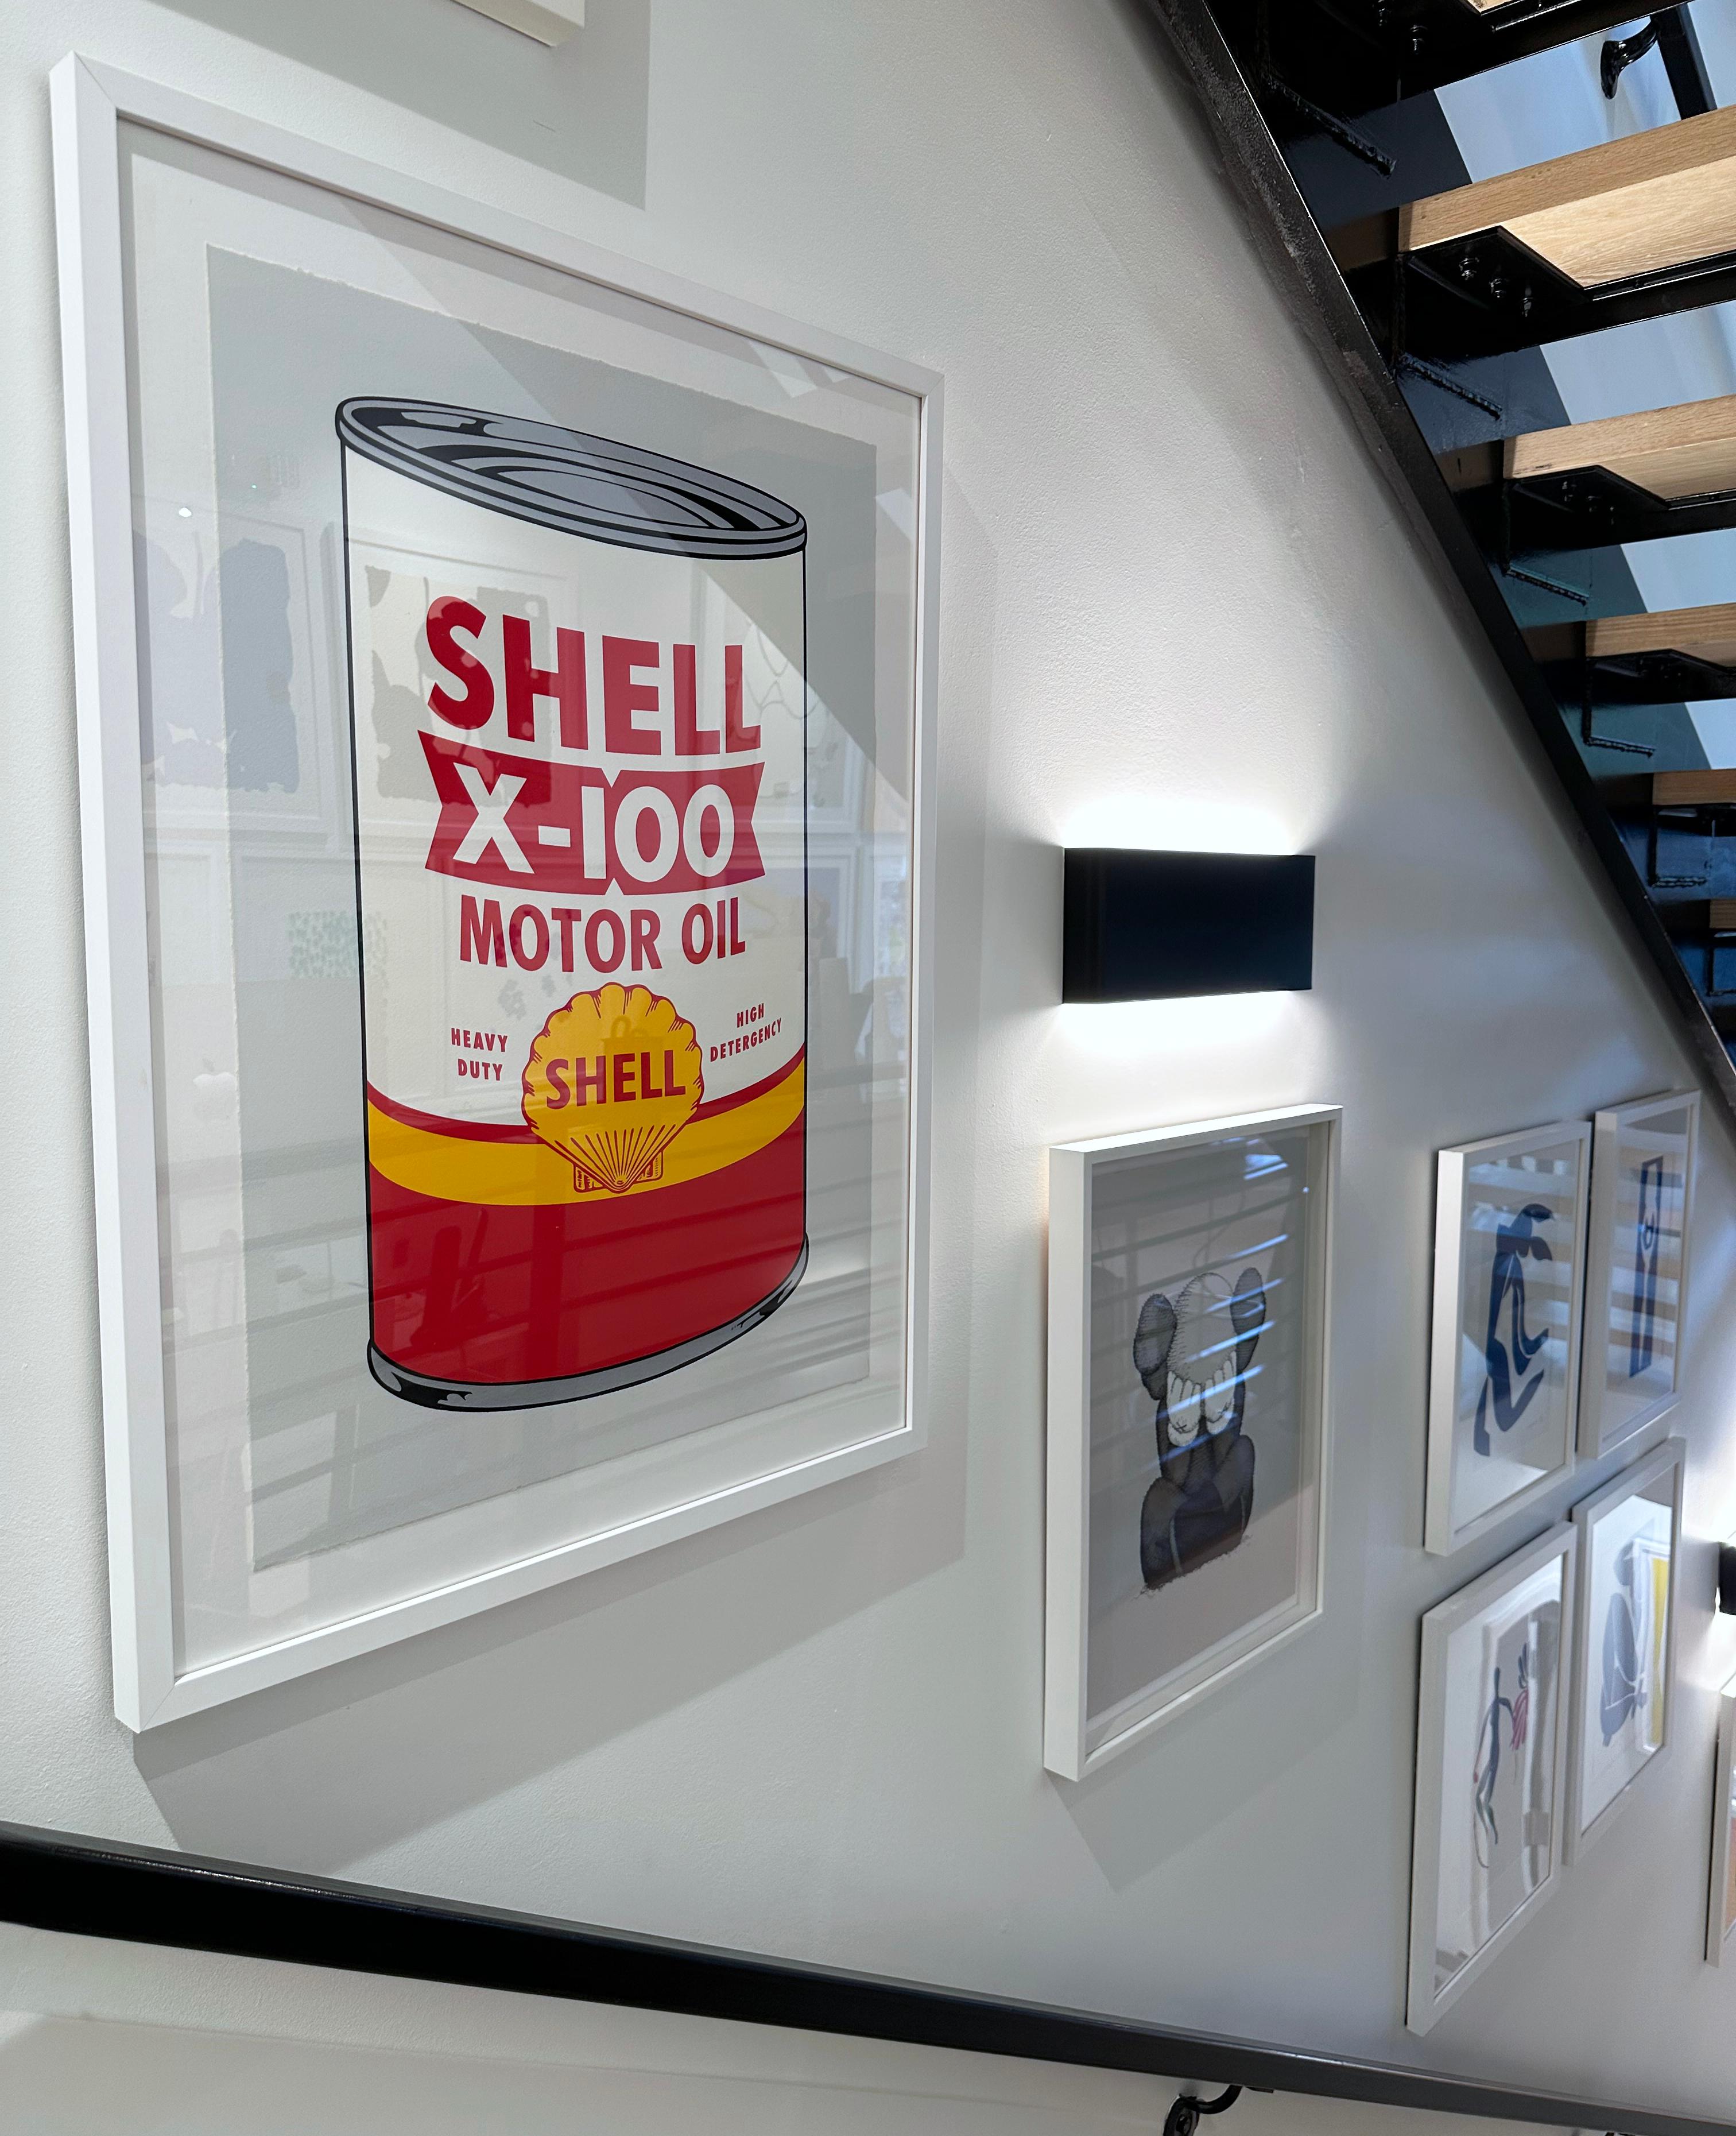 Artist: Heiner Meyer
Title: Shell
Portfolio: Masterpieces in Oils
Medium: Multi-colored screenprint on handmade paper
Year: 2016
Edition: 42/60
Frame Size: 33